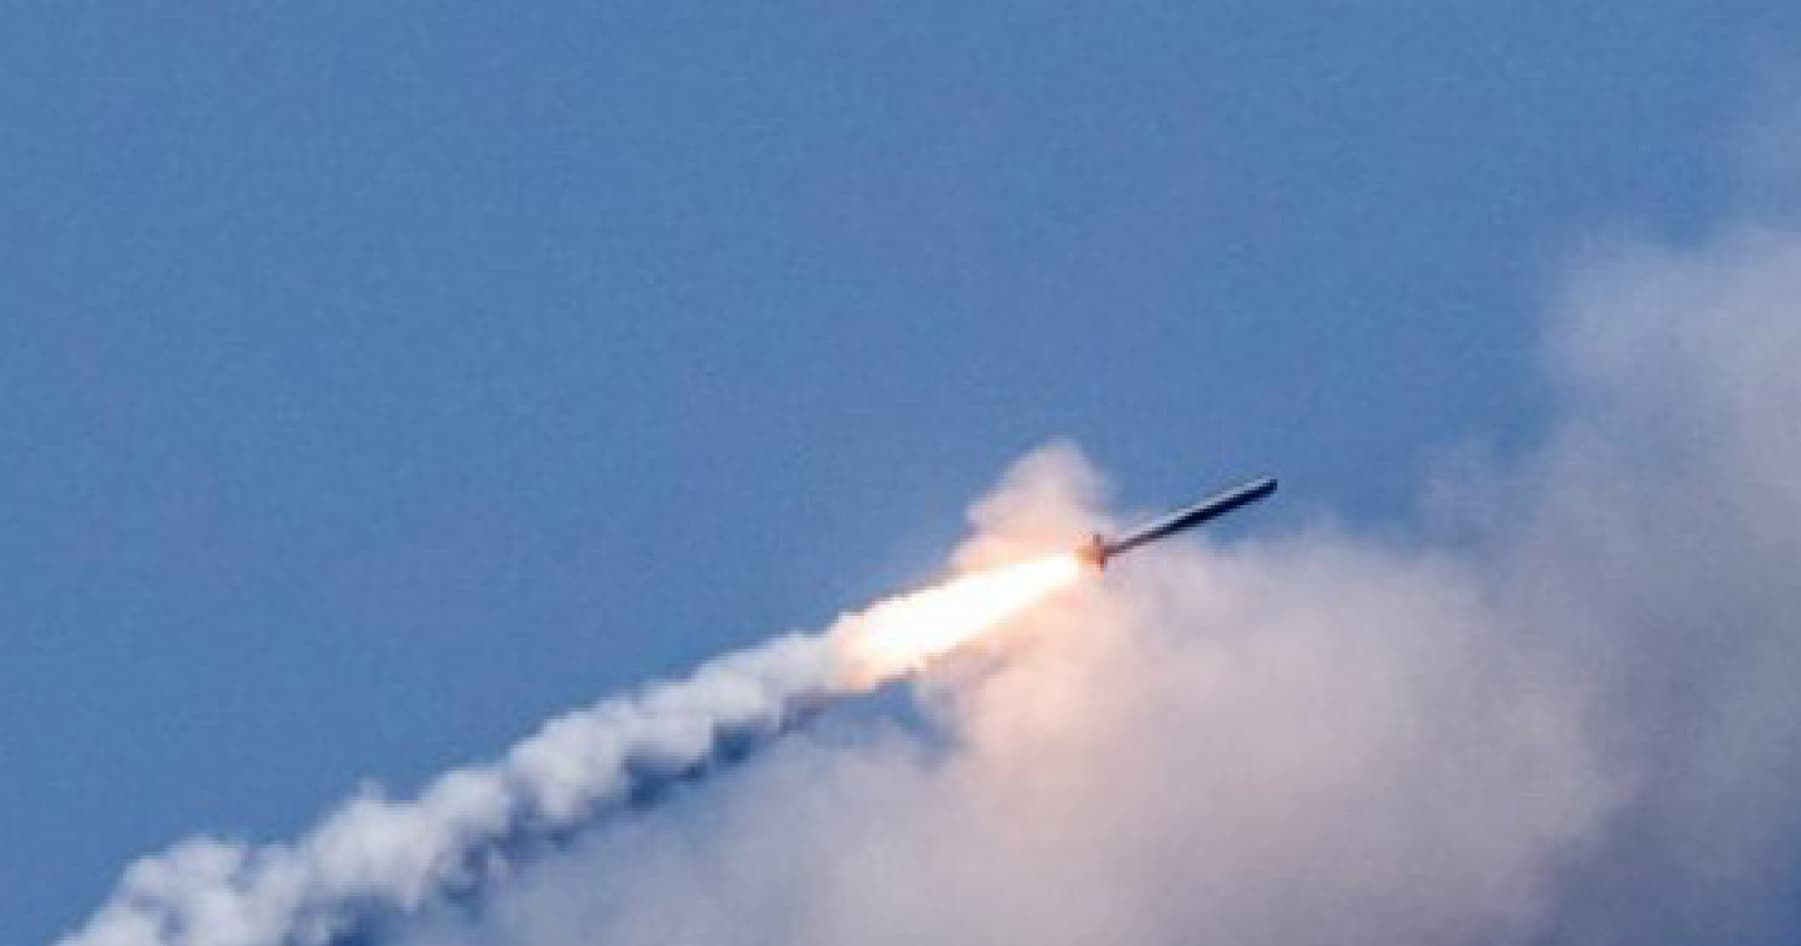 Росіяни випустили близько 100 ракет під час масованого ракетного обстрілу 15 листопада